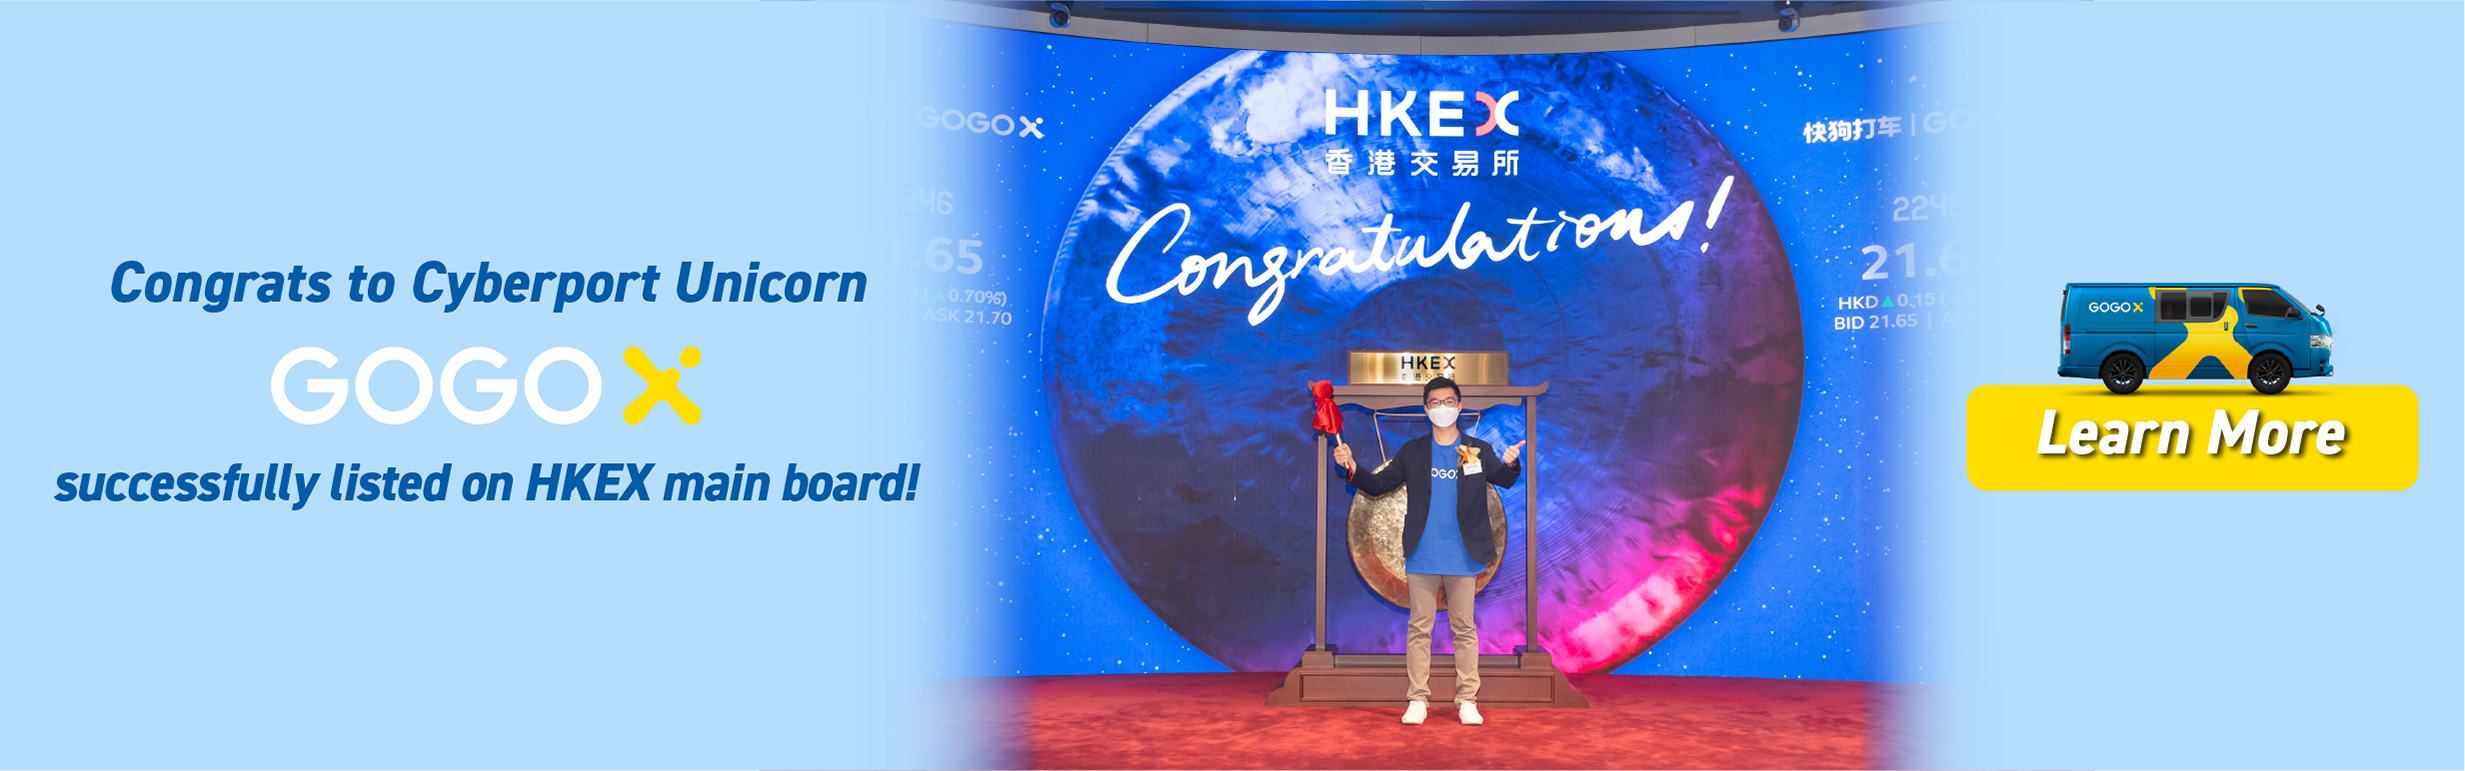 Congrats to Cyberport Unicorn GOGOX debuted IPO at HKEX main board